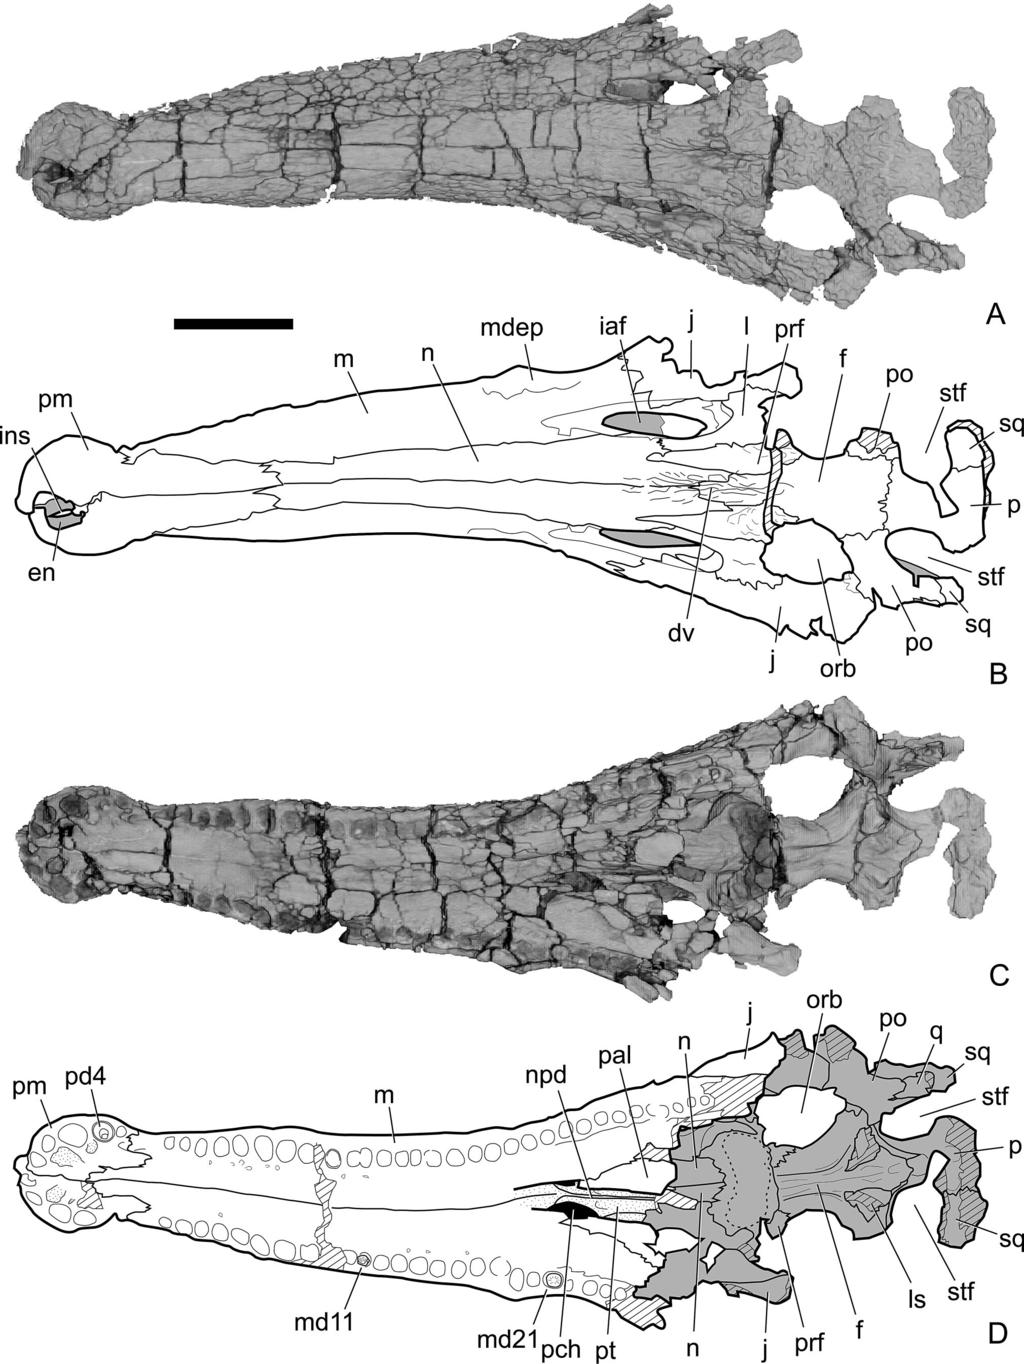 596 JOURNAL OF VERTEBRATE PALEONTOLOGY, VOL. 22, NO. 3, 22 FIGURE 2. Dorsal and ventral views of Calsoyasuchus valliceps nov. (TMM 43631-1).